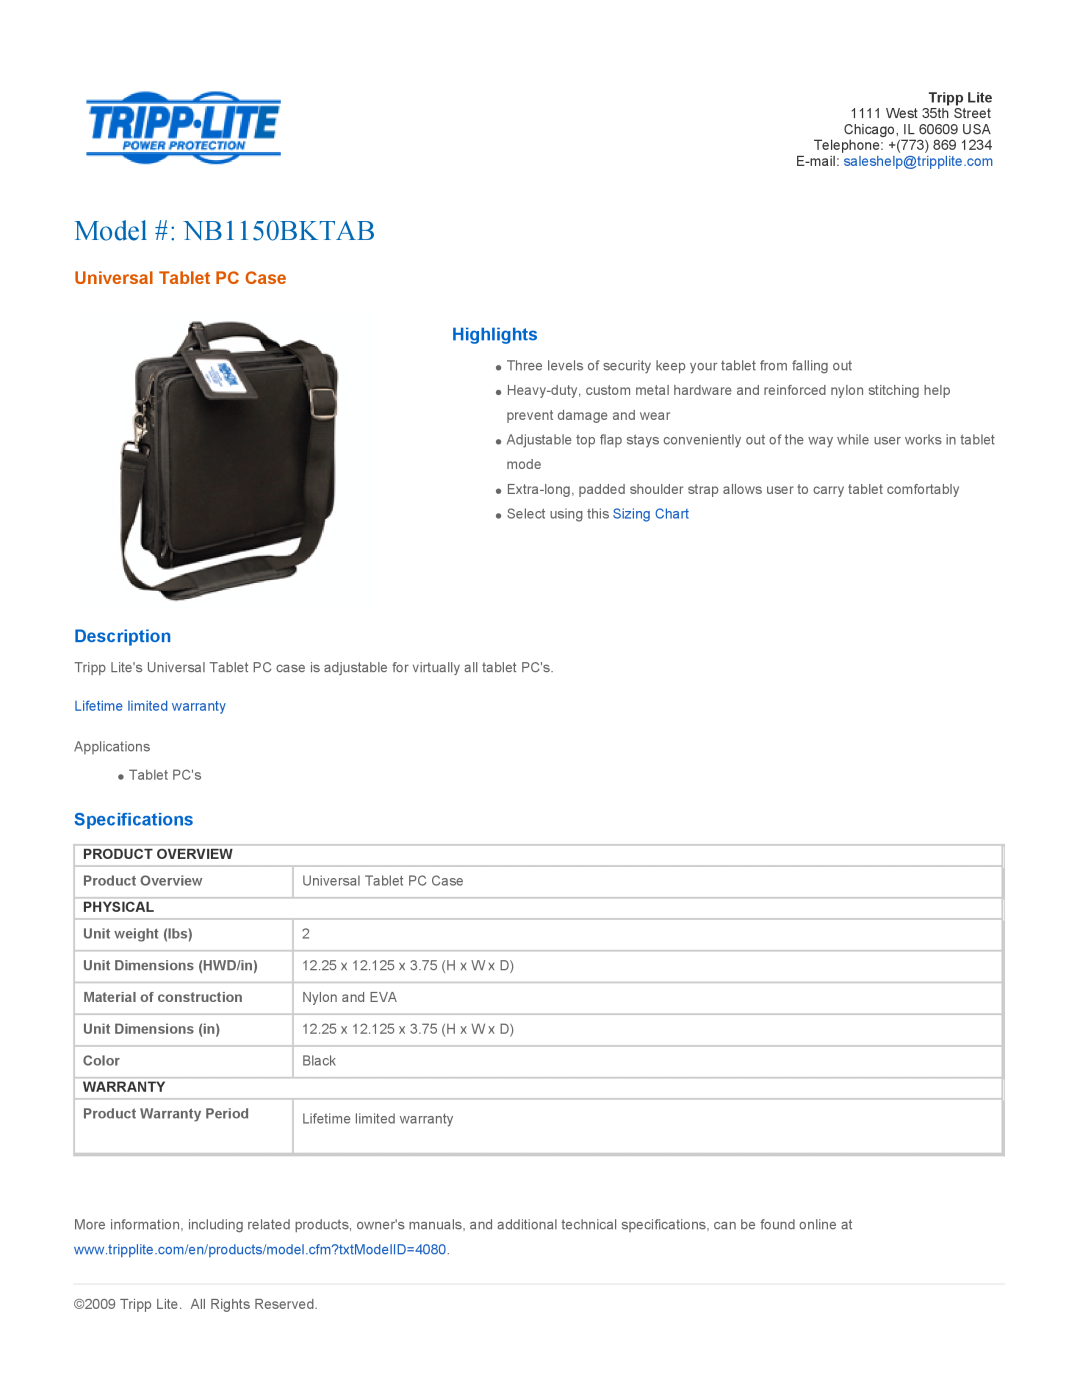 Tripp Lite specifications Model # NB1150BKTAB, Universal Tablet PC Case, Highlights, Description, Specifications 